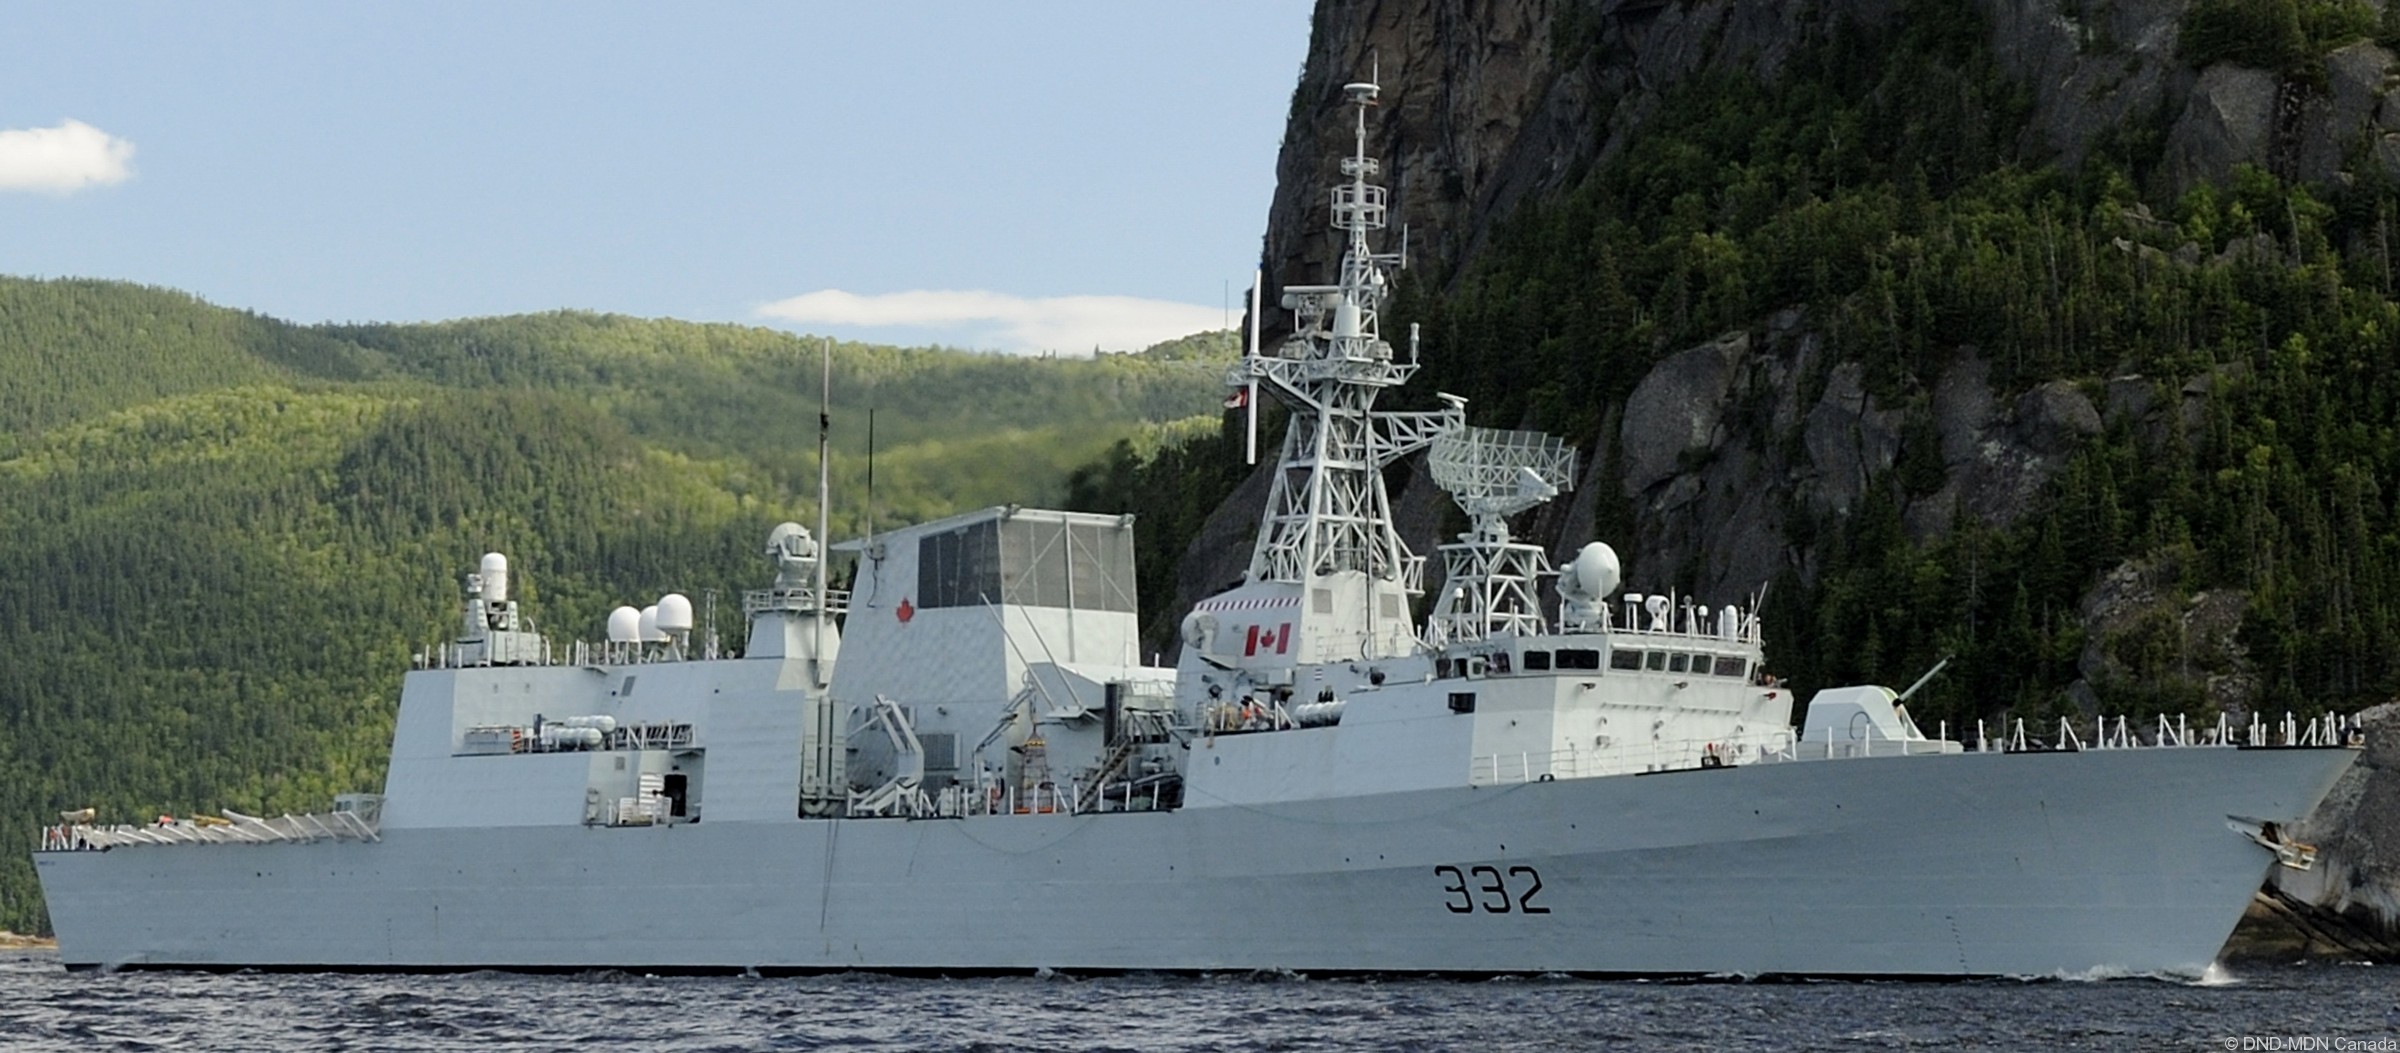 ffh-332 hmcs ville de quebec halifax class helicopter patrol frigate ncsm royal canadian navy 30